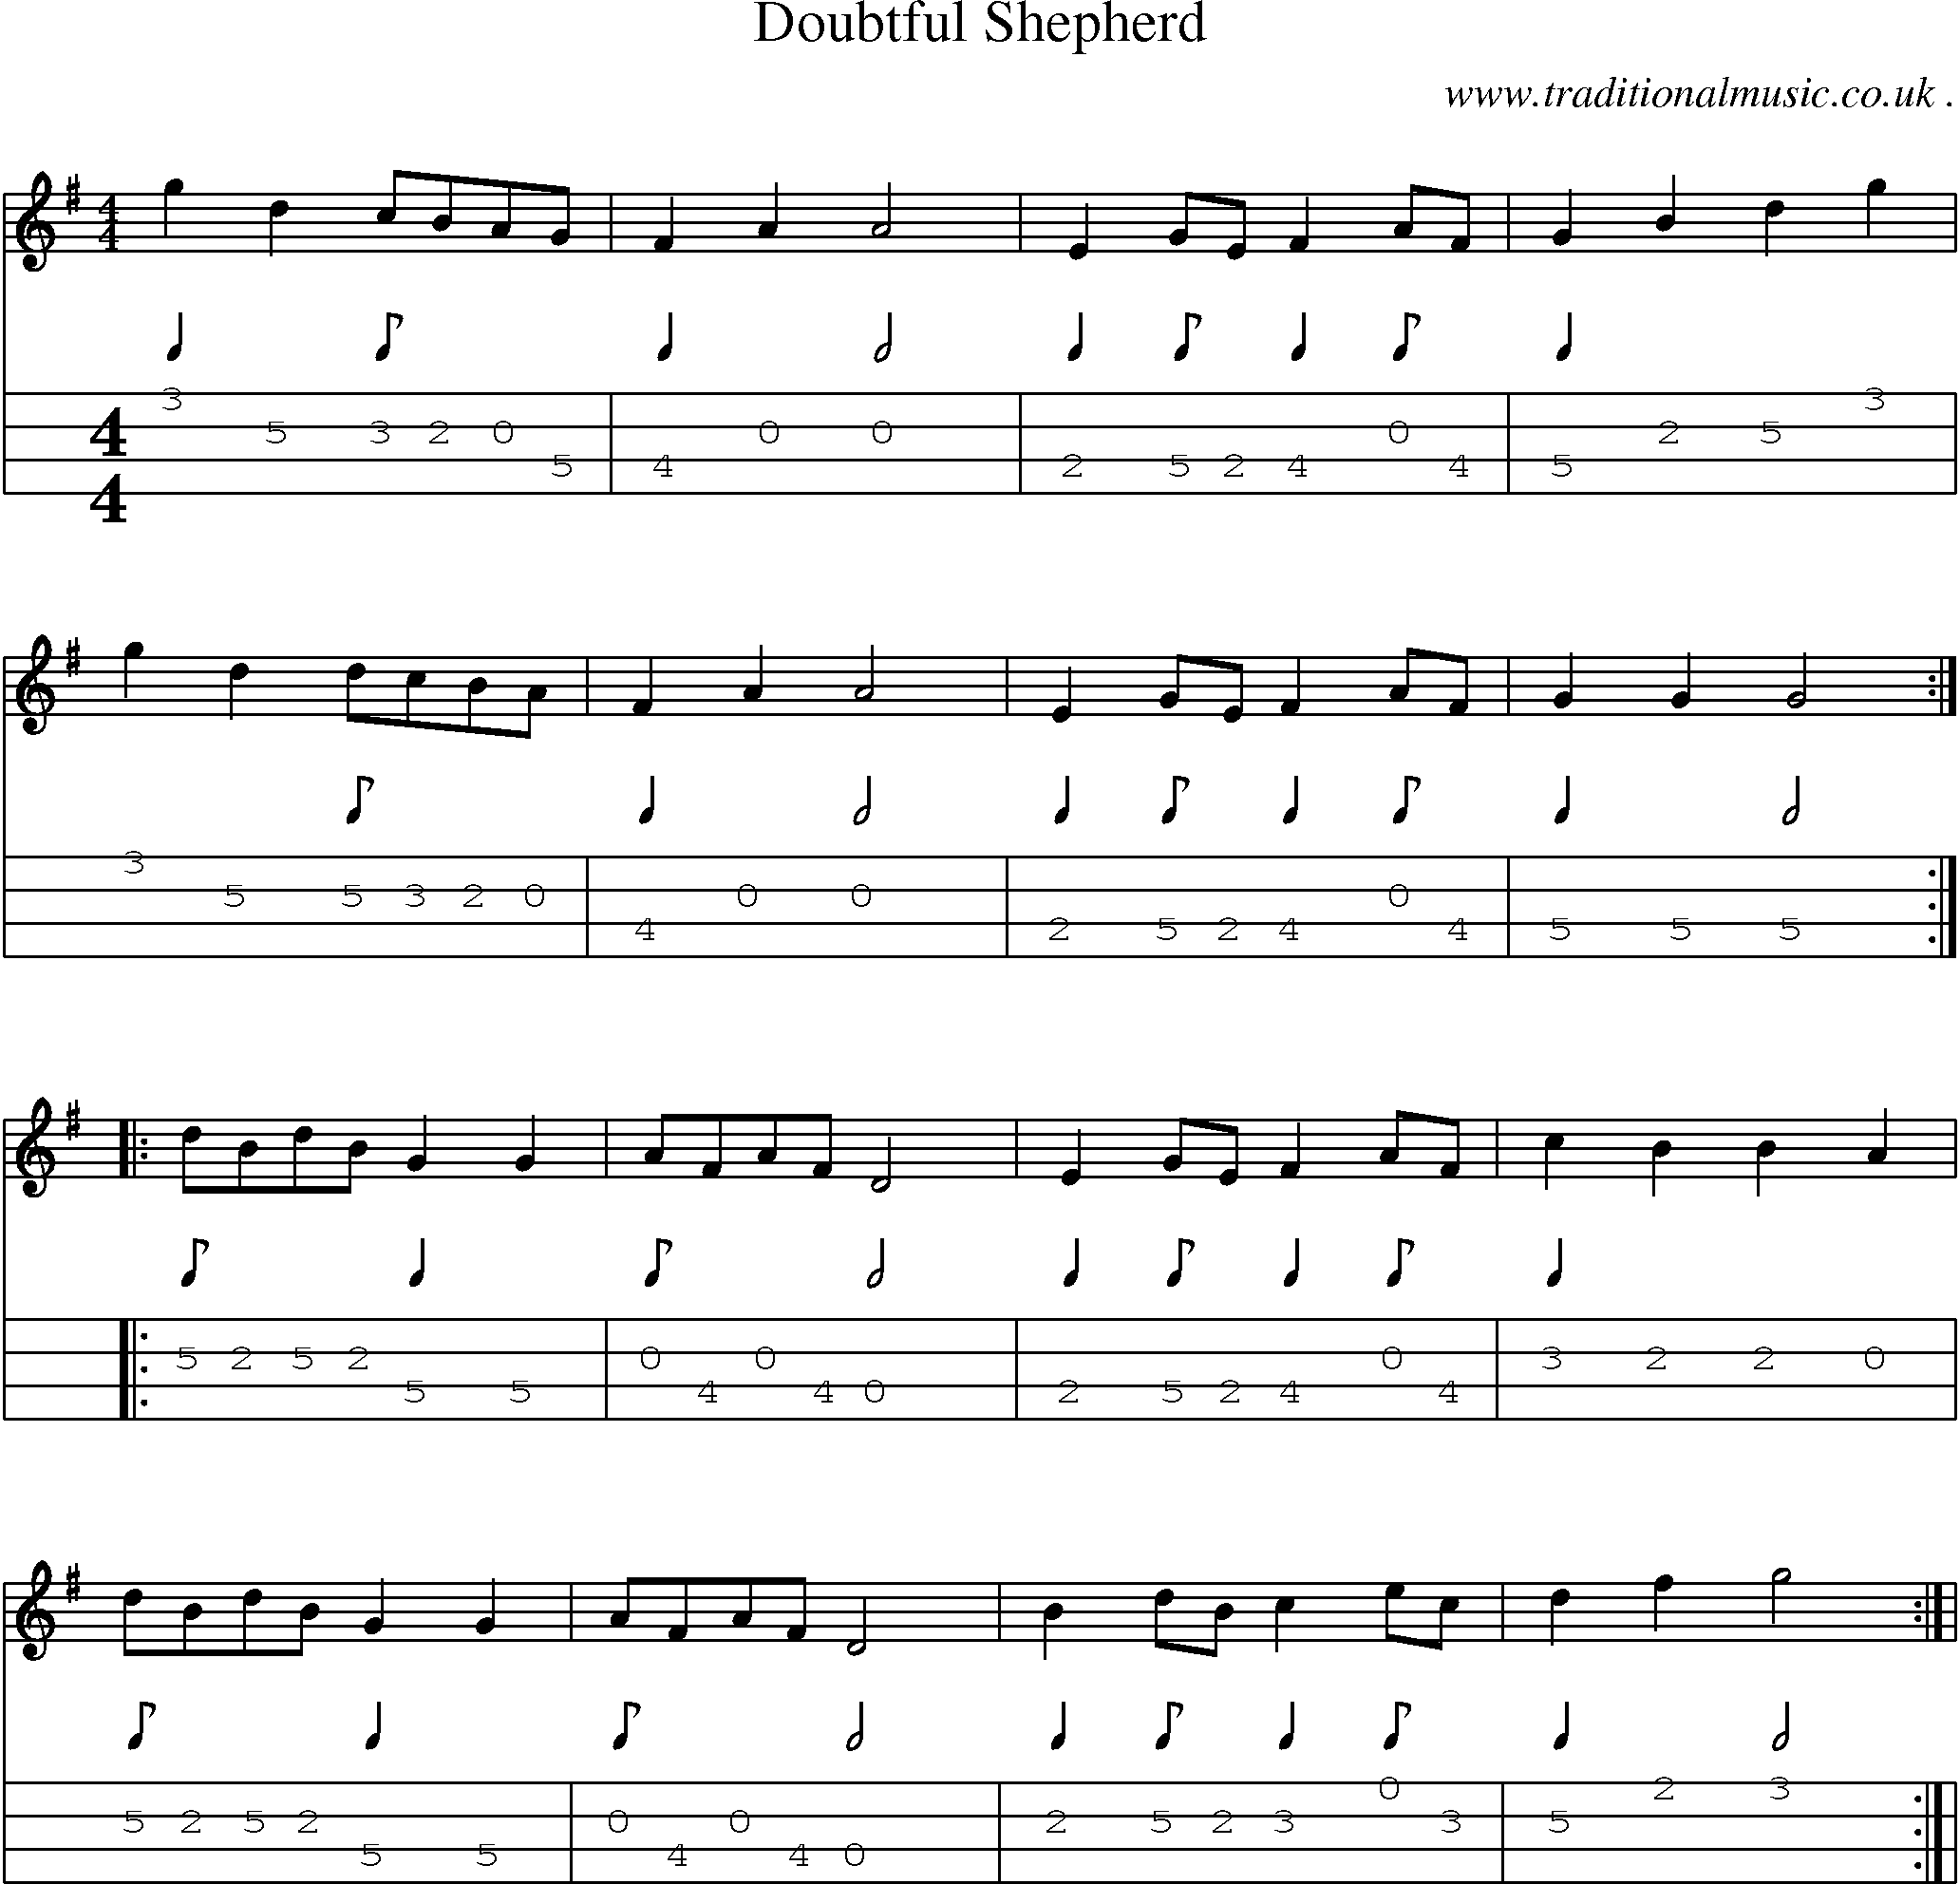 Sheet-Music and Mandolin Tabs for Doubtful Shepherd